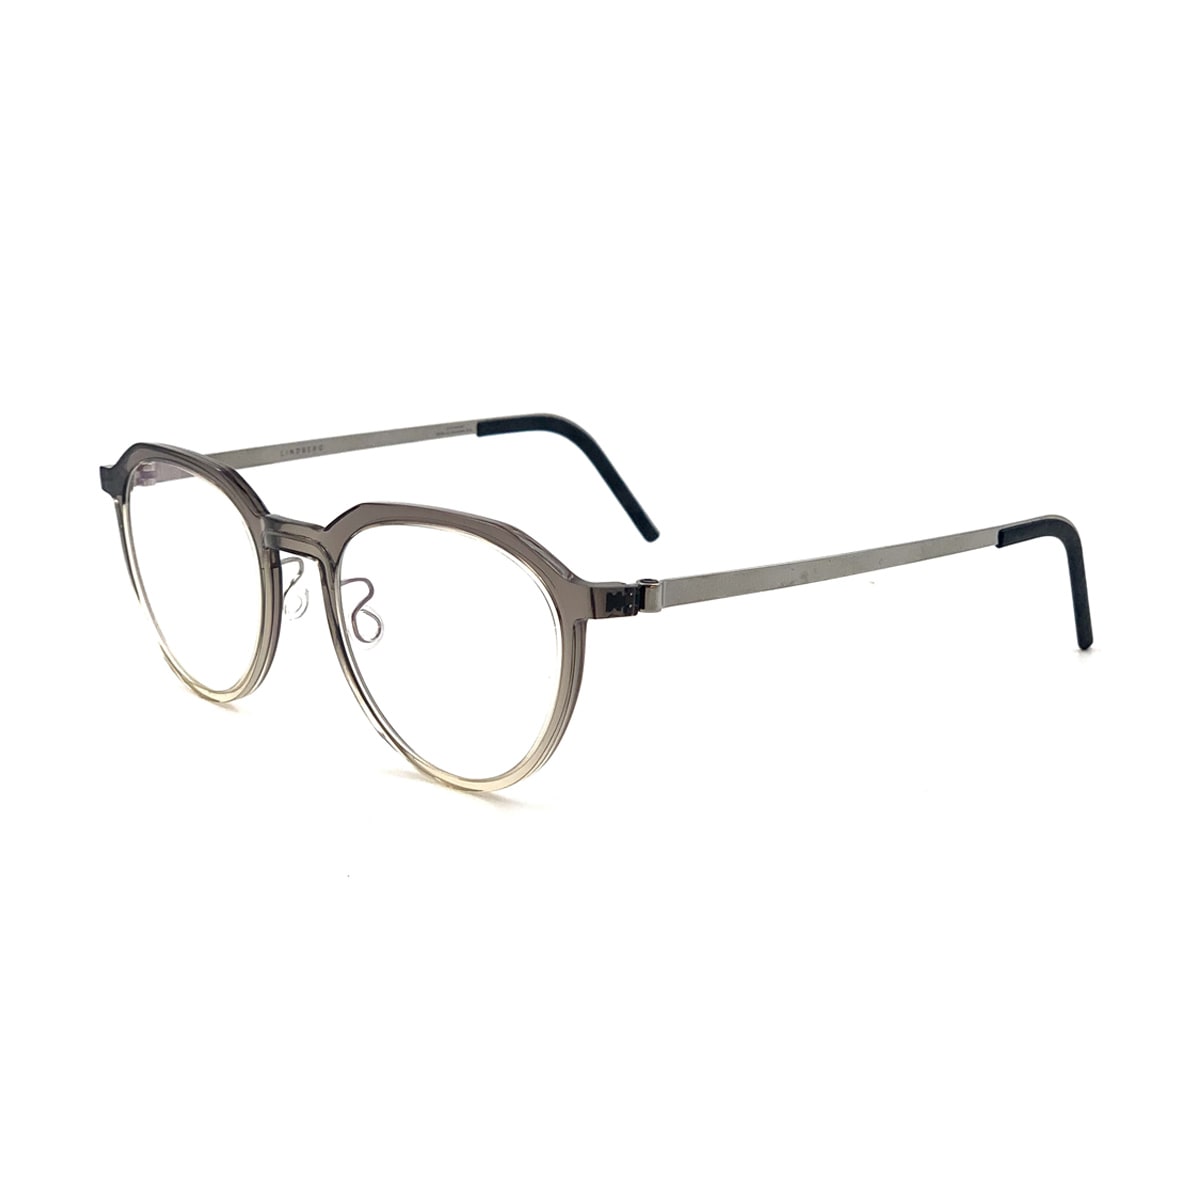 Lindberg Acetanium 1046 Ai32/k265 P10 Glasses